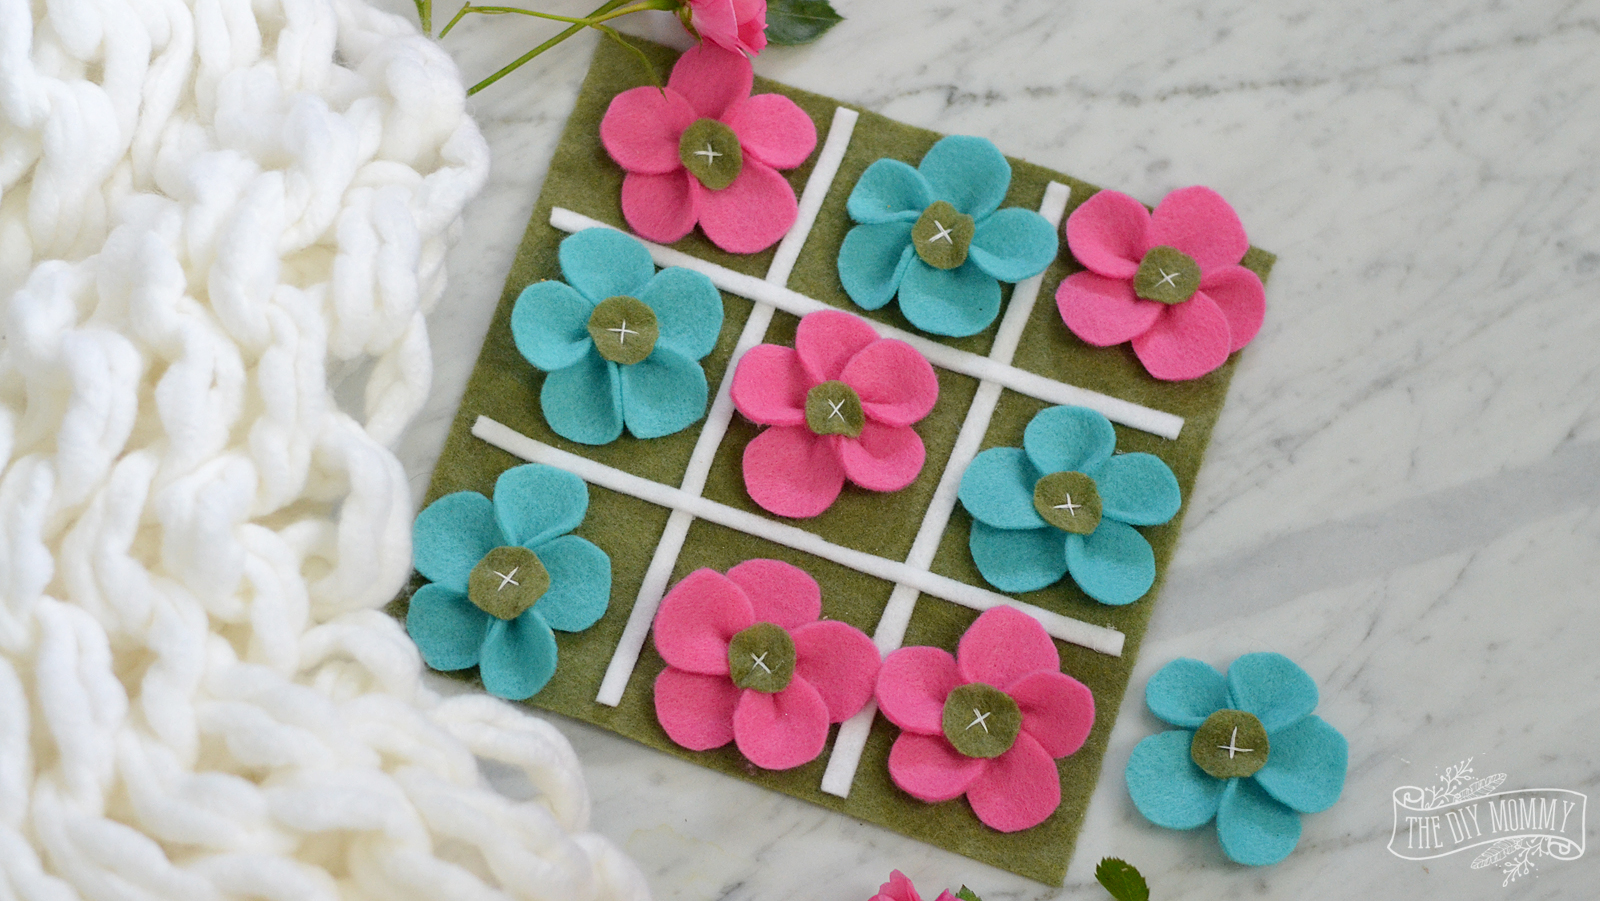 Make a Floral Felt Tic-Tac-Toe Game #12MonthsofDIY (Video)